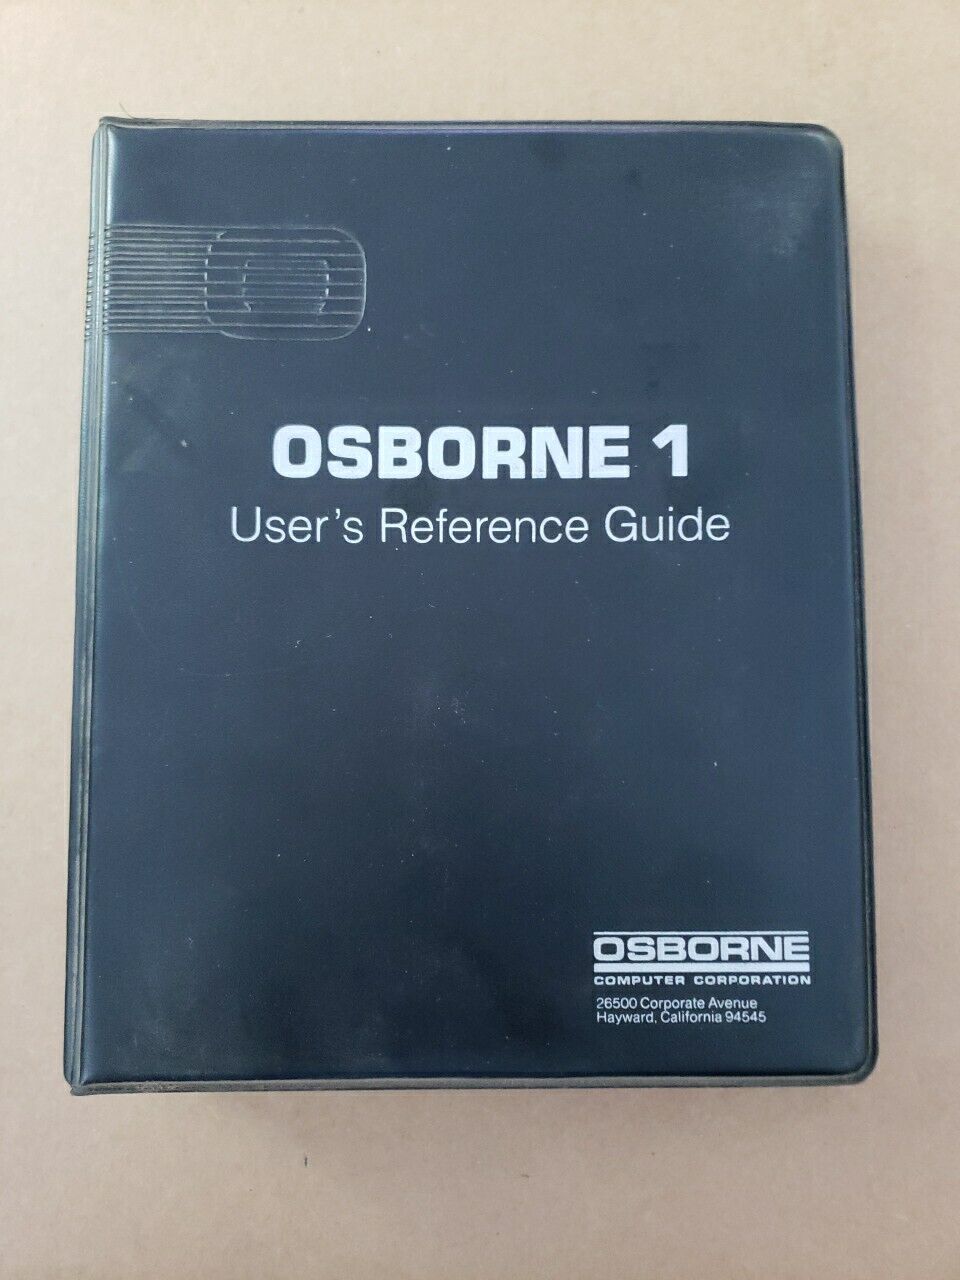 Rare 1981 Osborne 1 Computer User Reference Guide In Original Binder